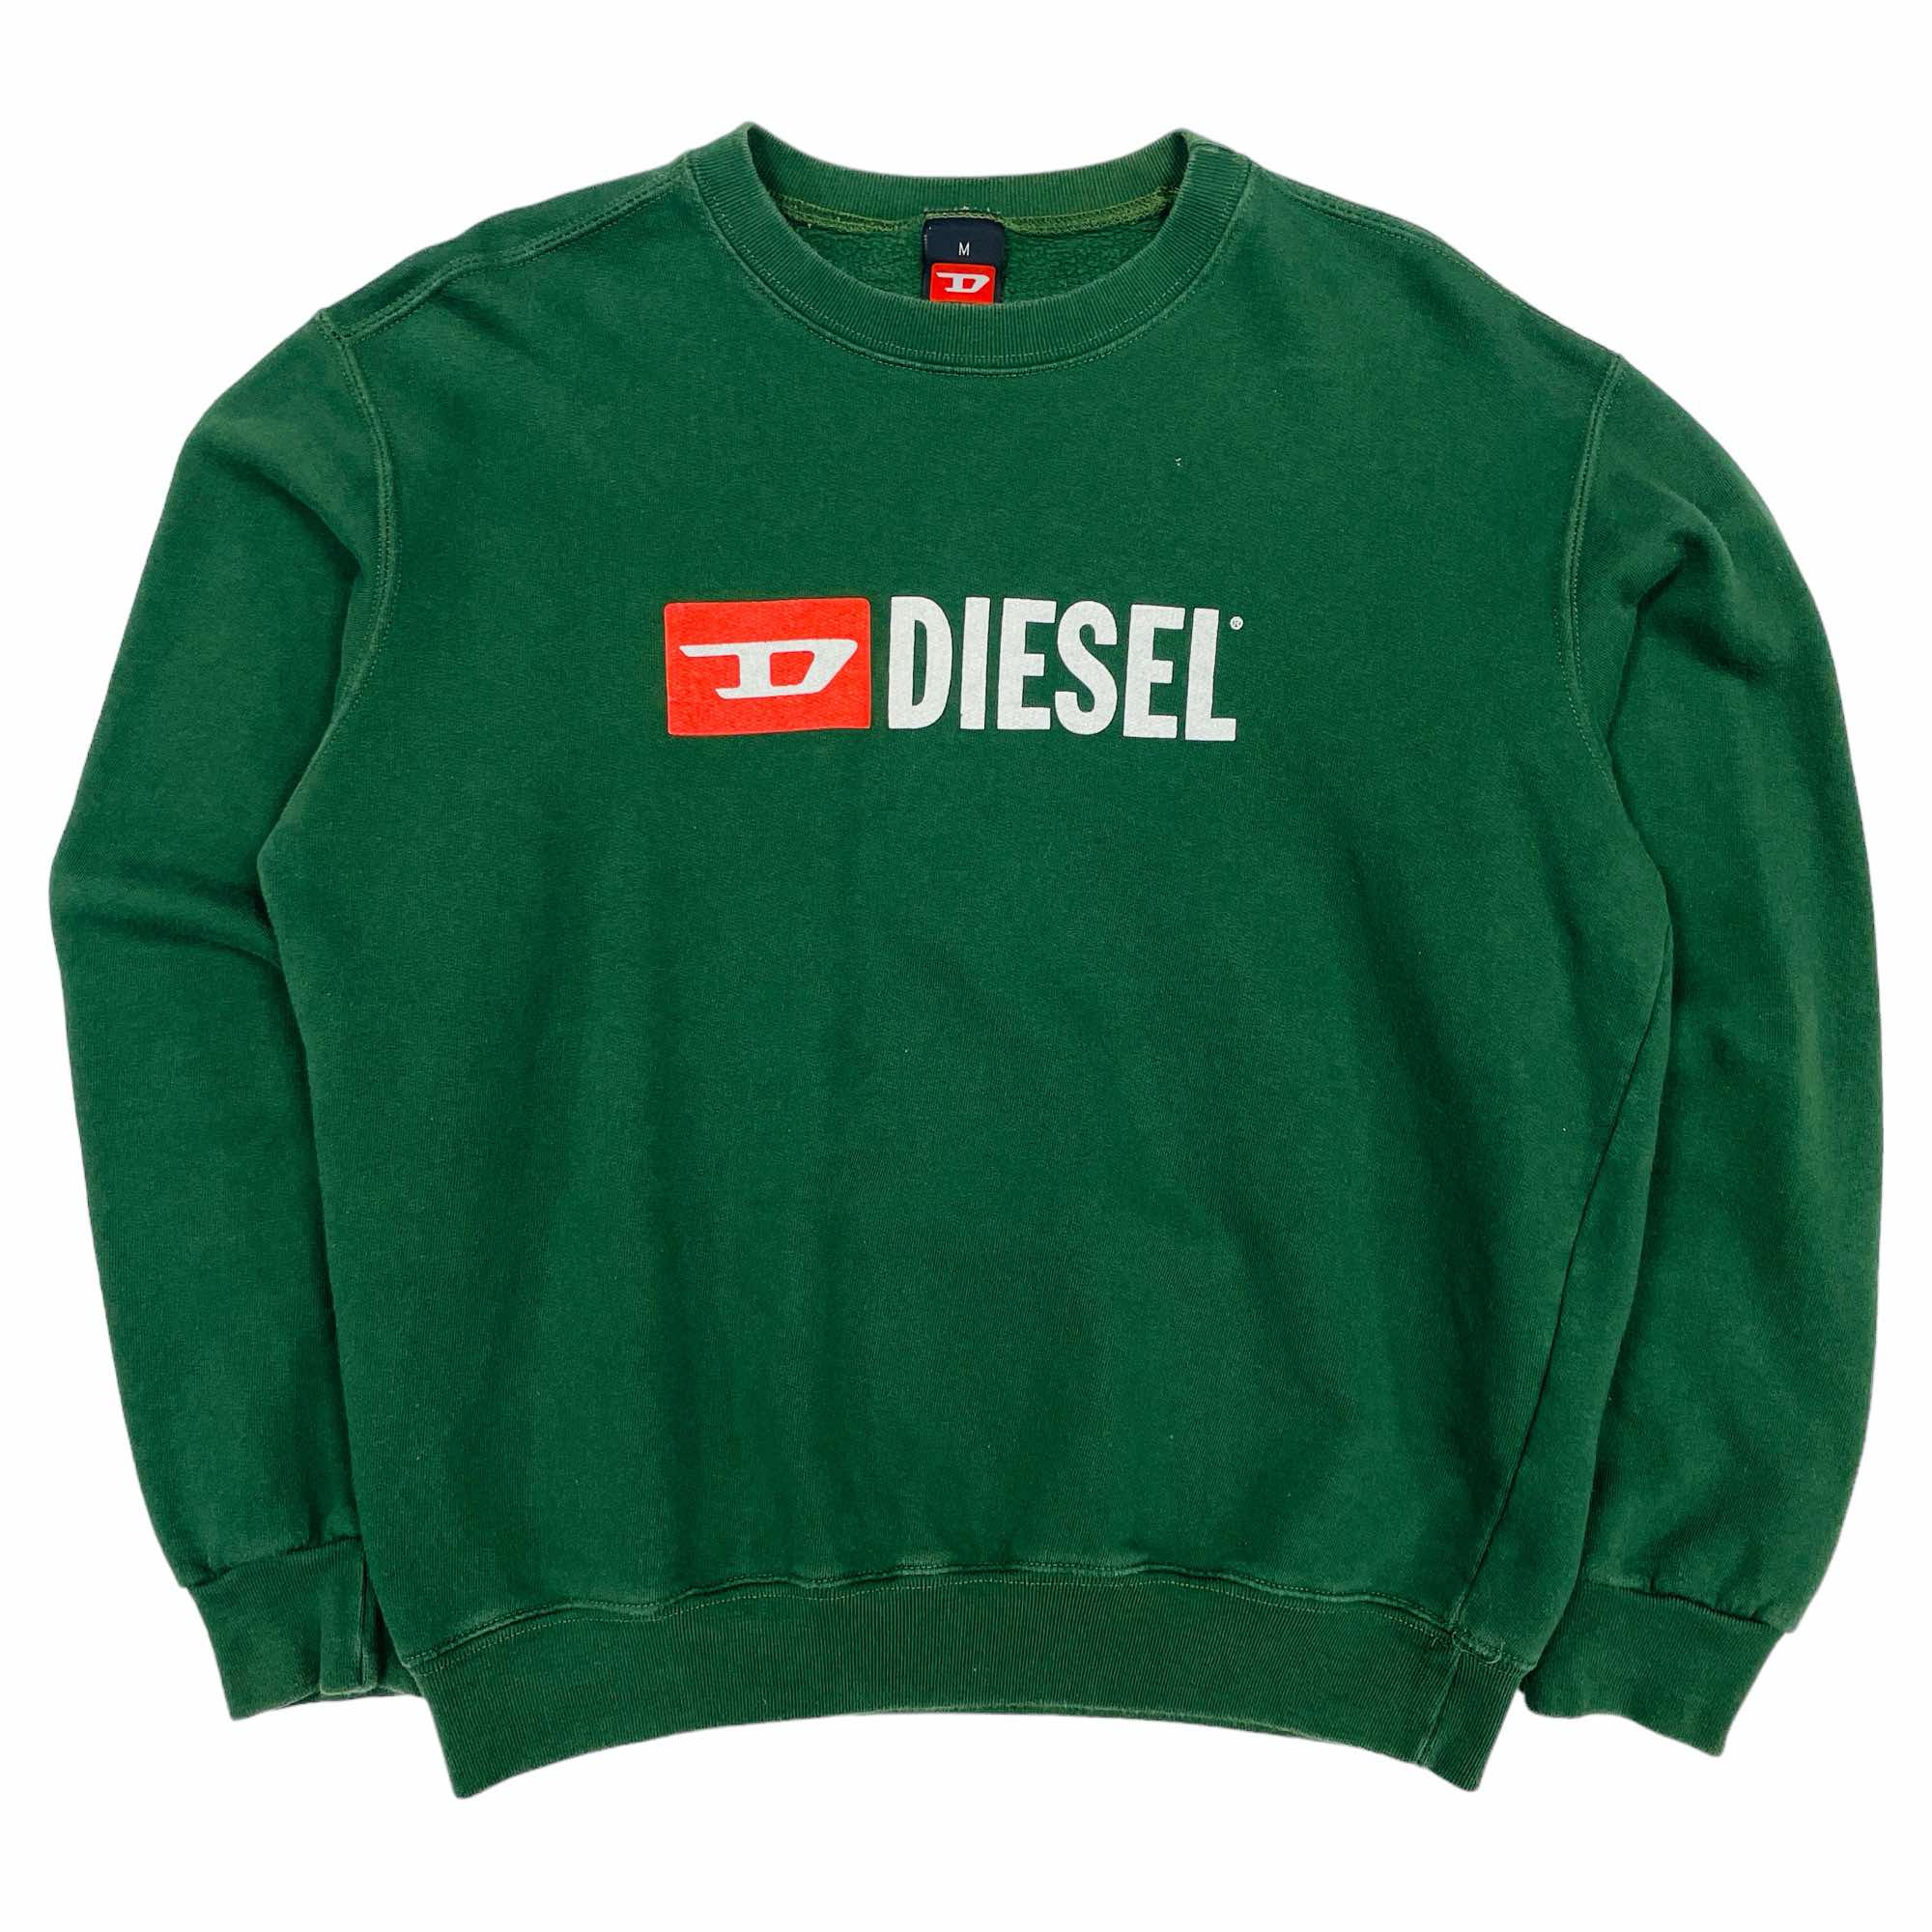 Diesel Spellout Sweatshirt - Medium